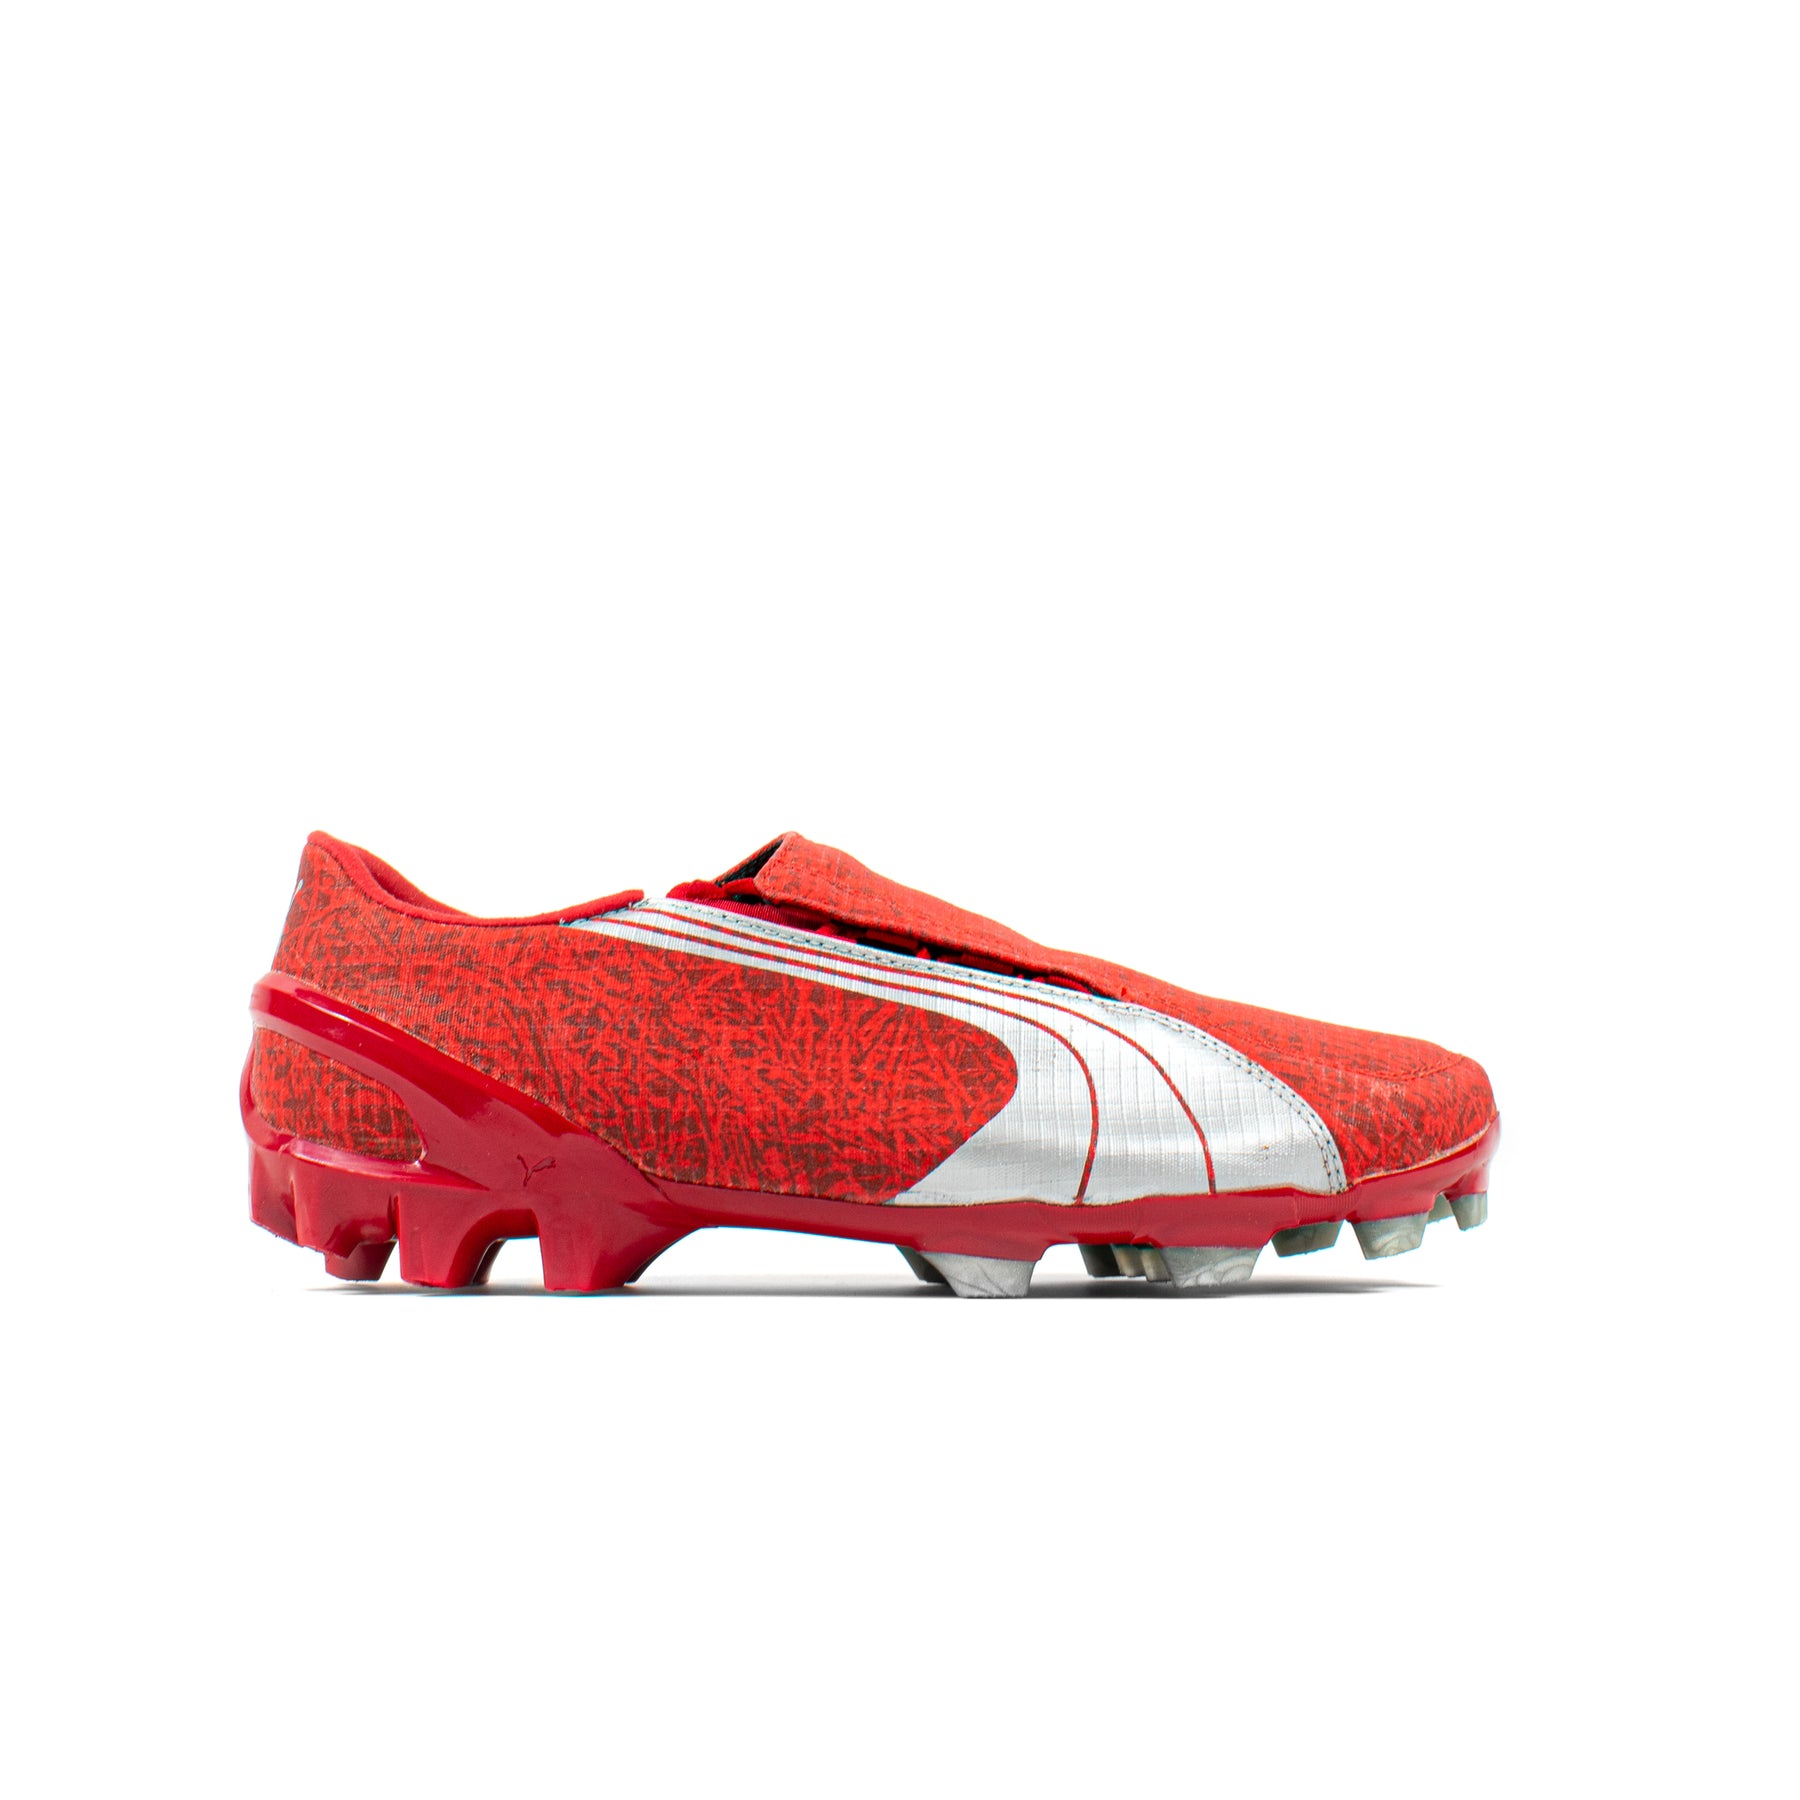 Puma V1.06 Red – Classic Soccer Cleats